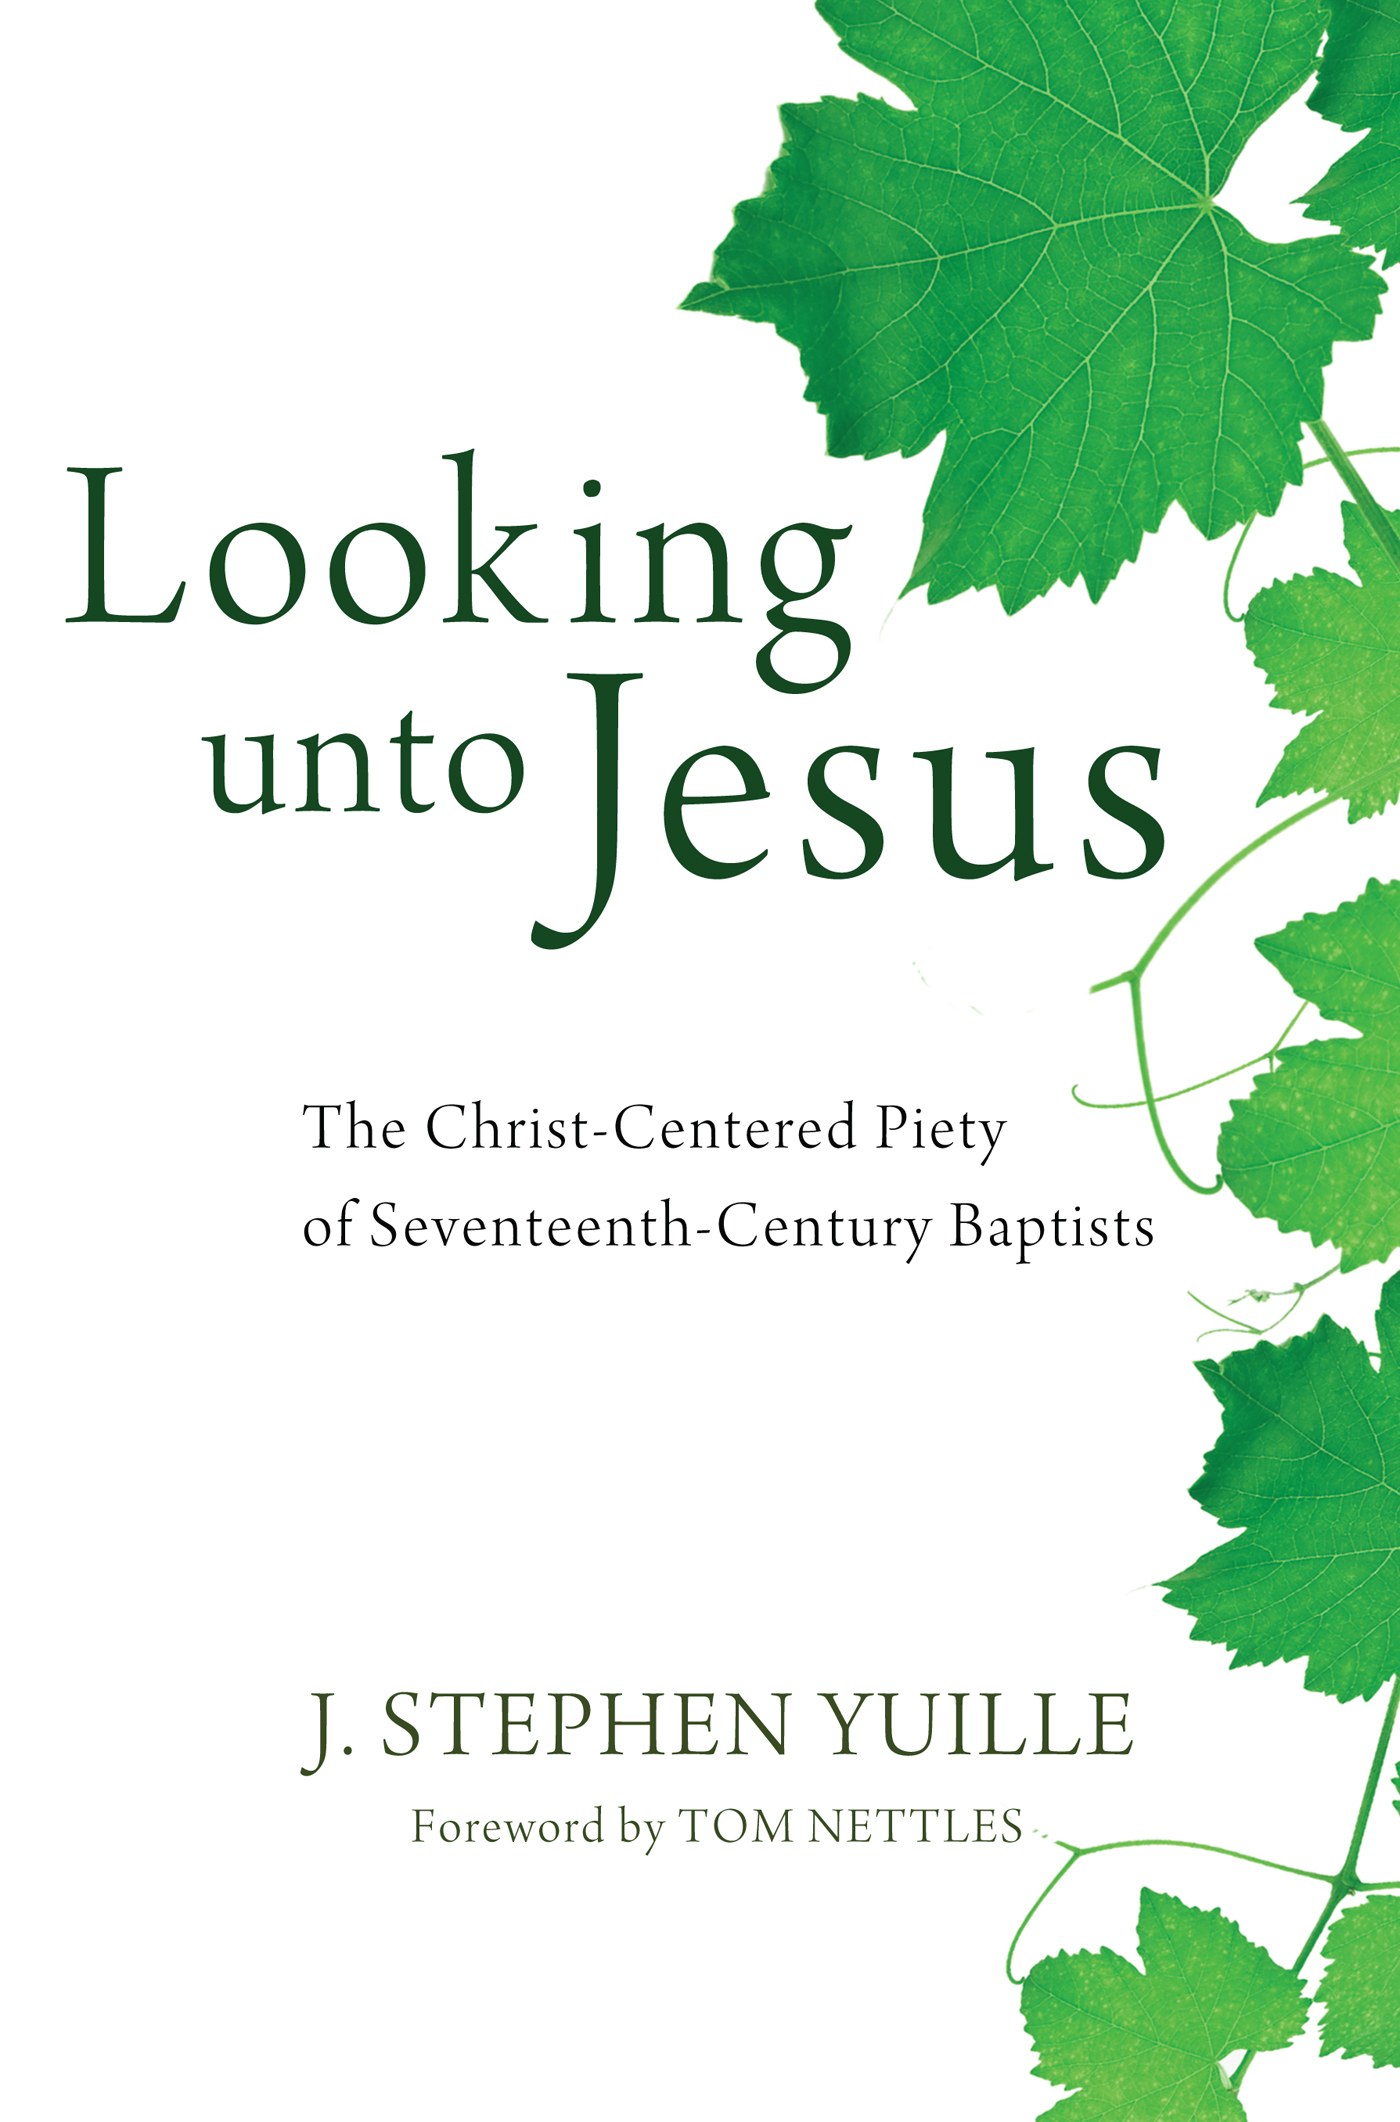 Looking Unto Jesus The Christ-Centered Piety of Seventeenth-Century Baptists - photo 1